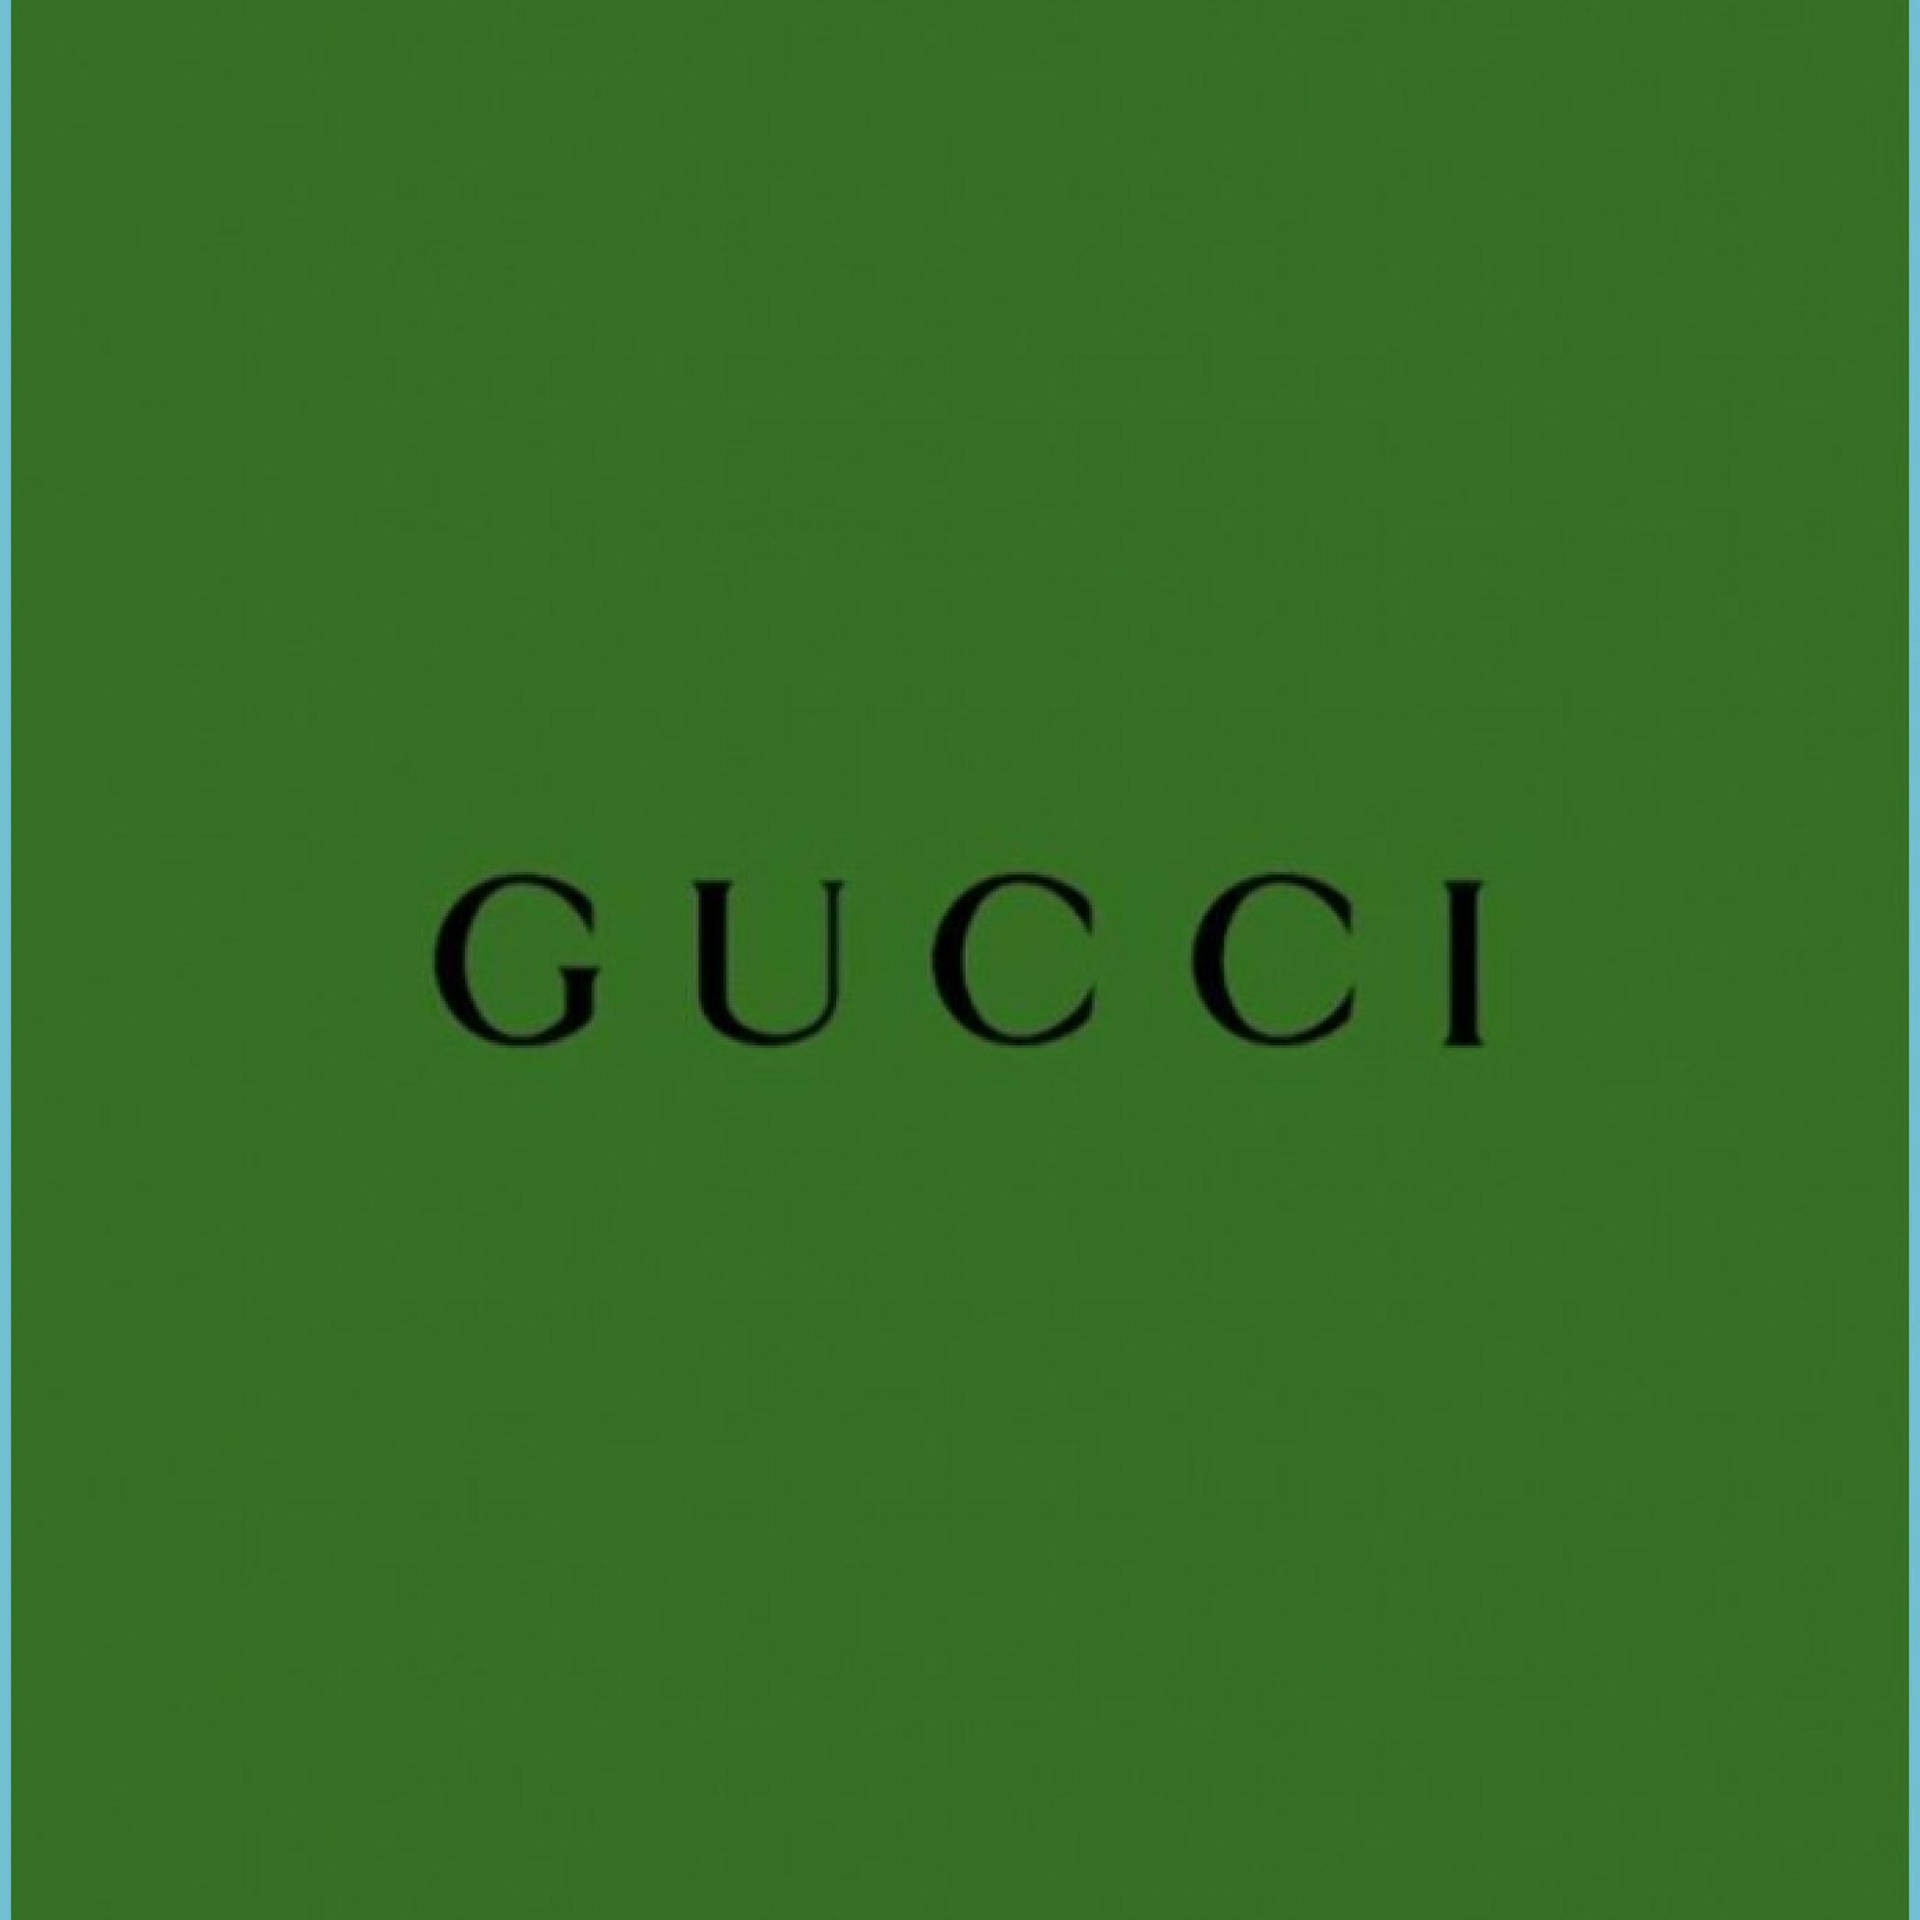 Gucci Plain Green Papel de Parede